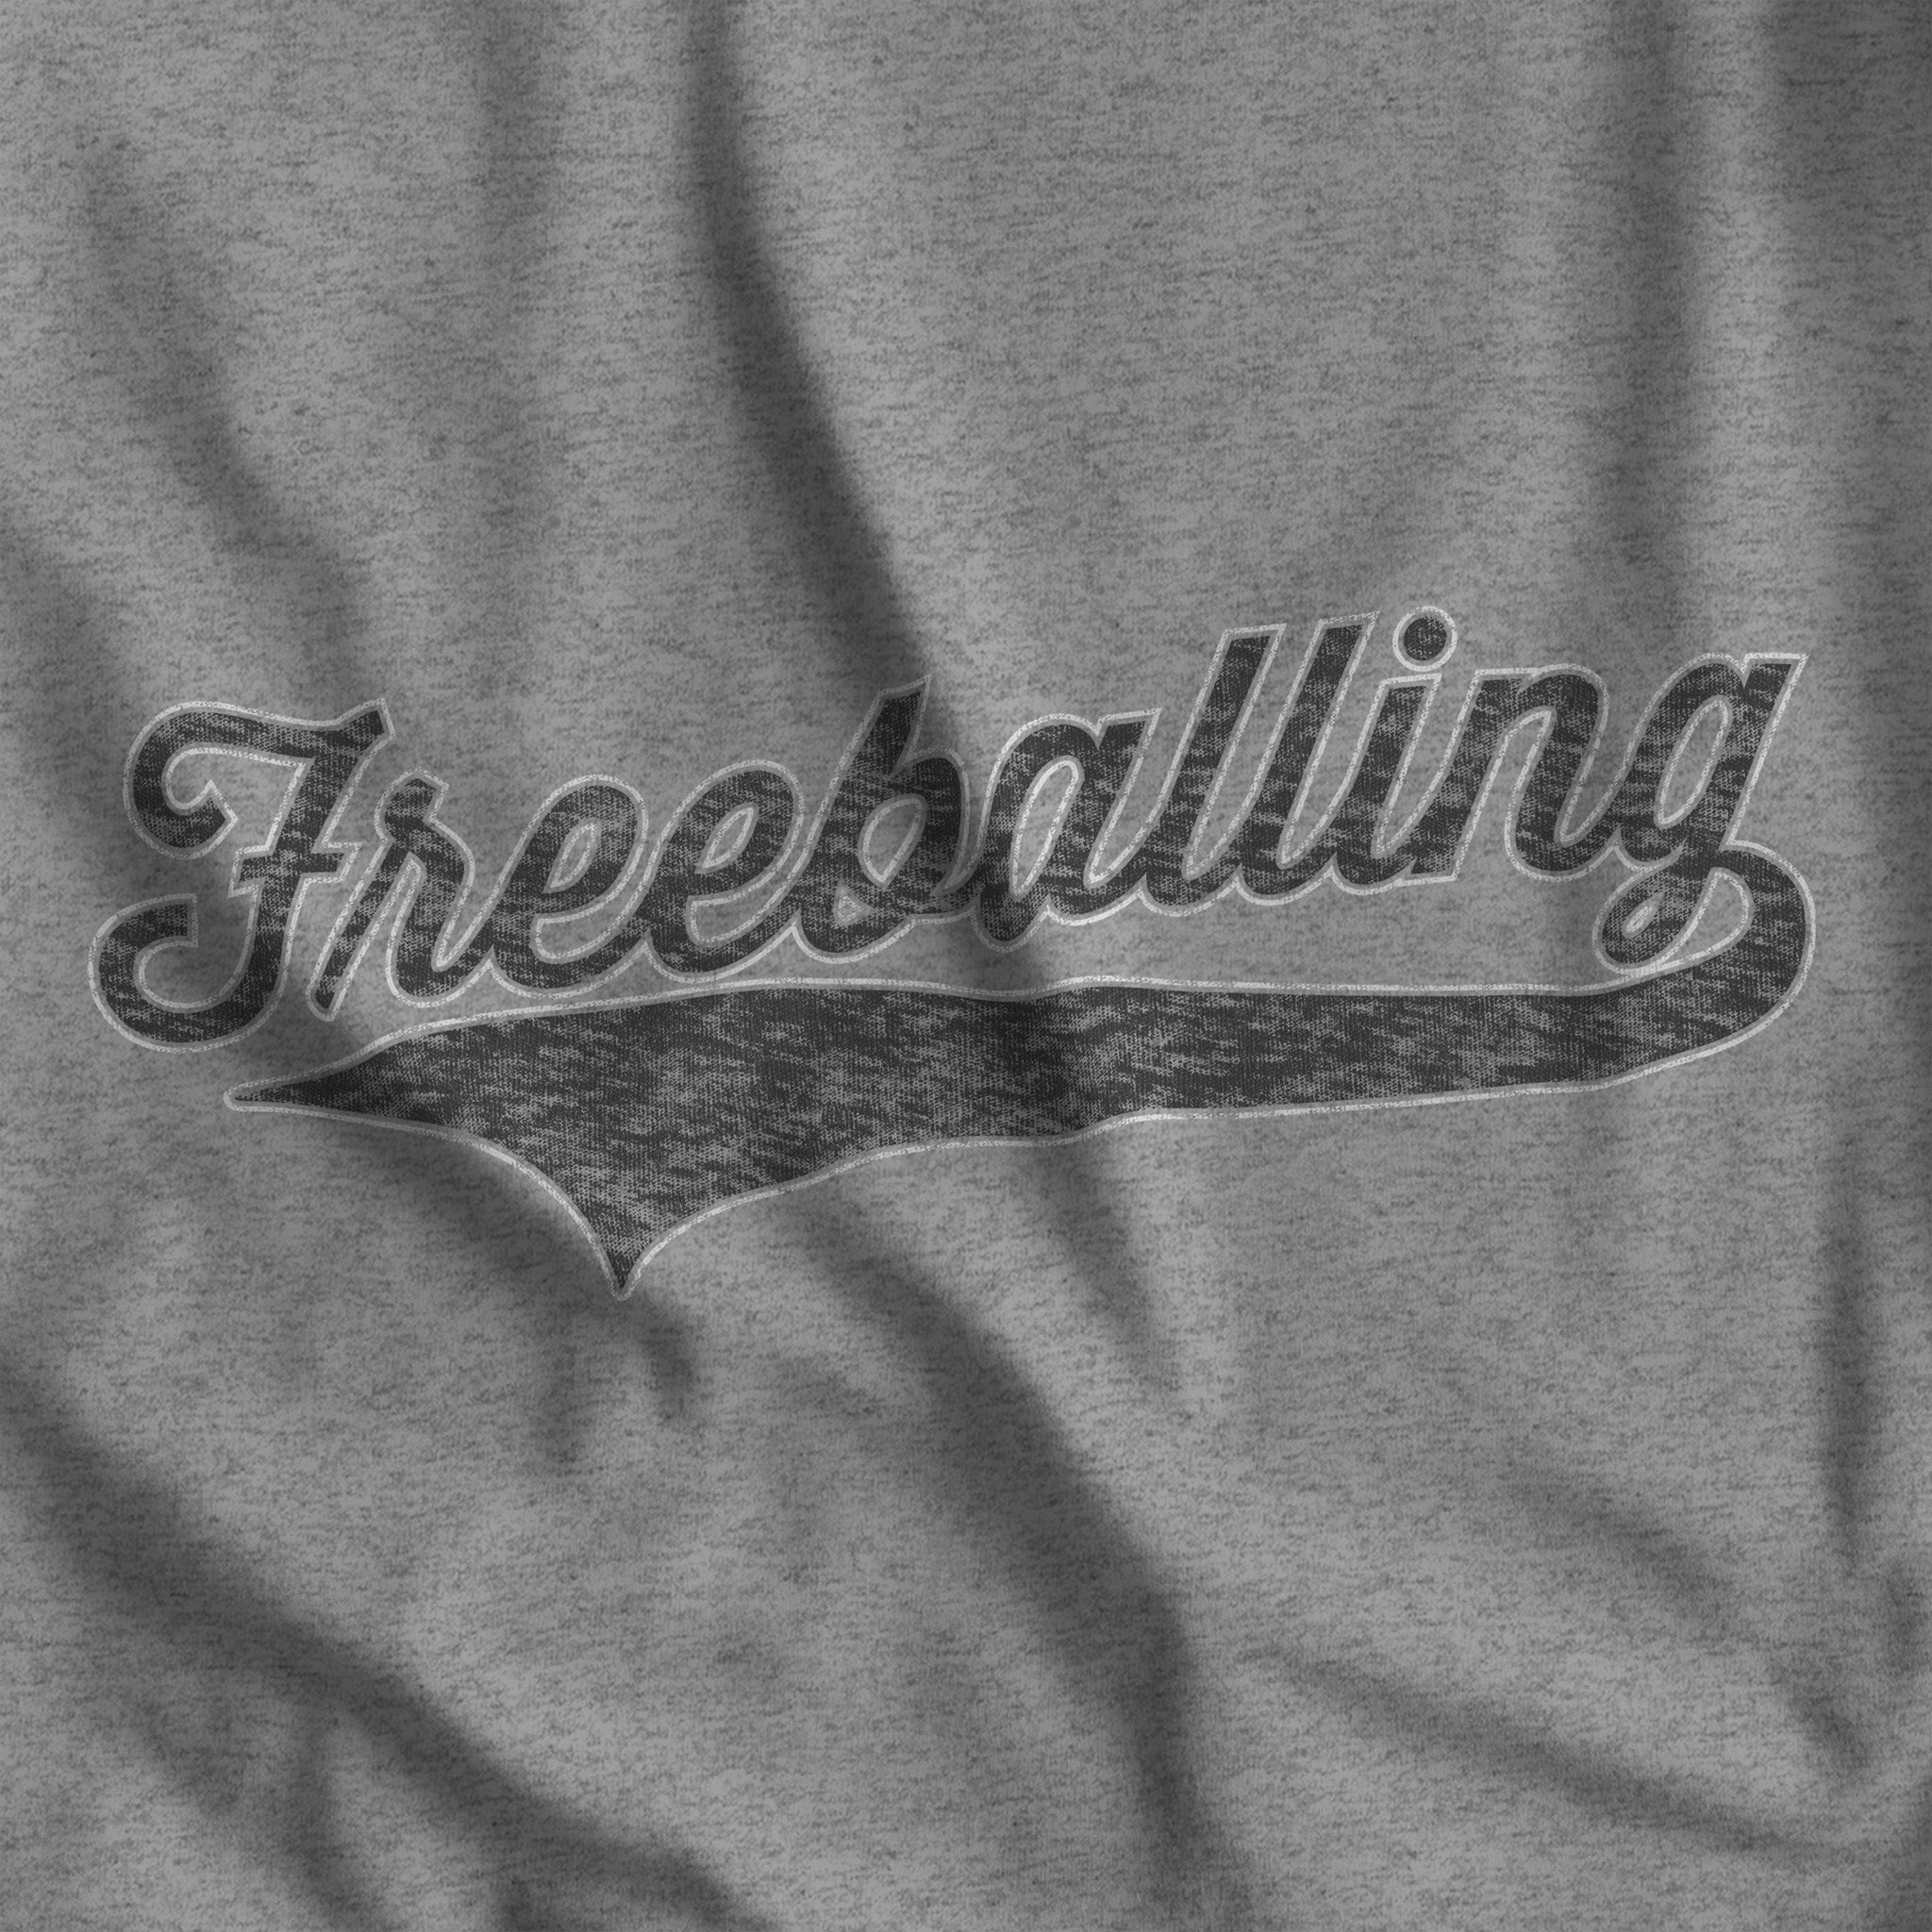 "Freeballing" 3/4 Raglan Shirt - Vintage-Inspired Bold Statement Tee - Hunky Tops